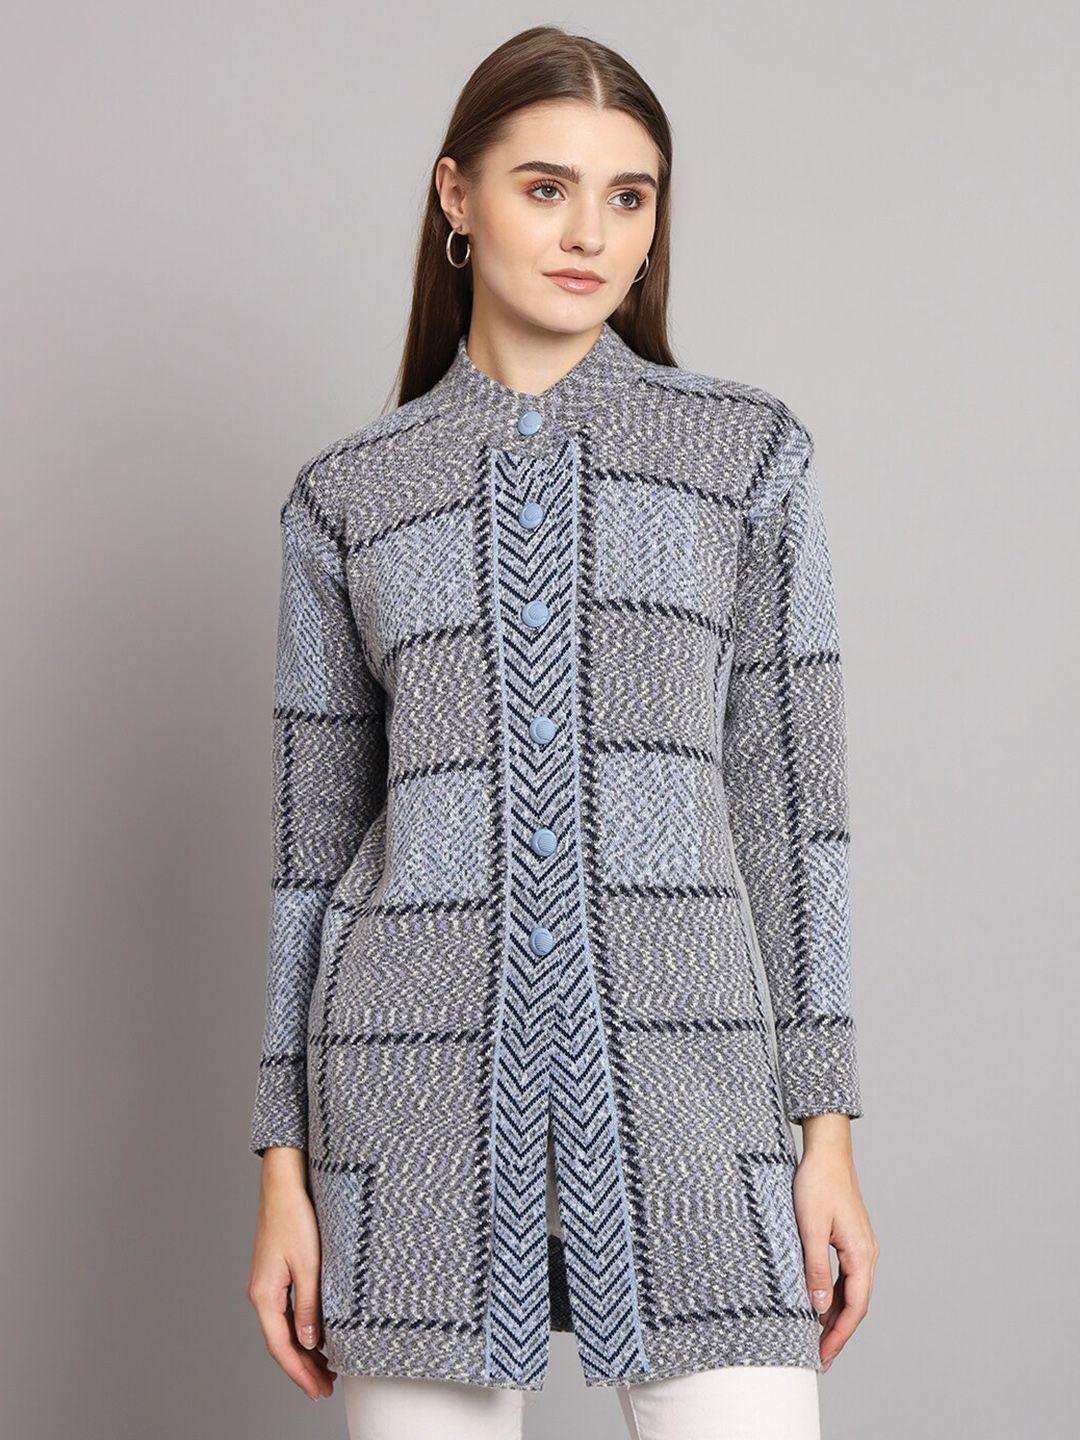 ewools striped acrylic wool longline cardigan sweater